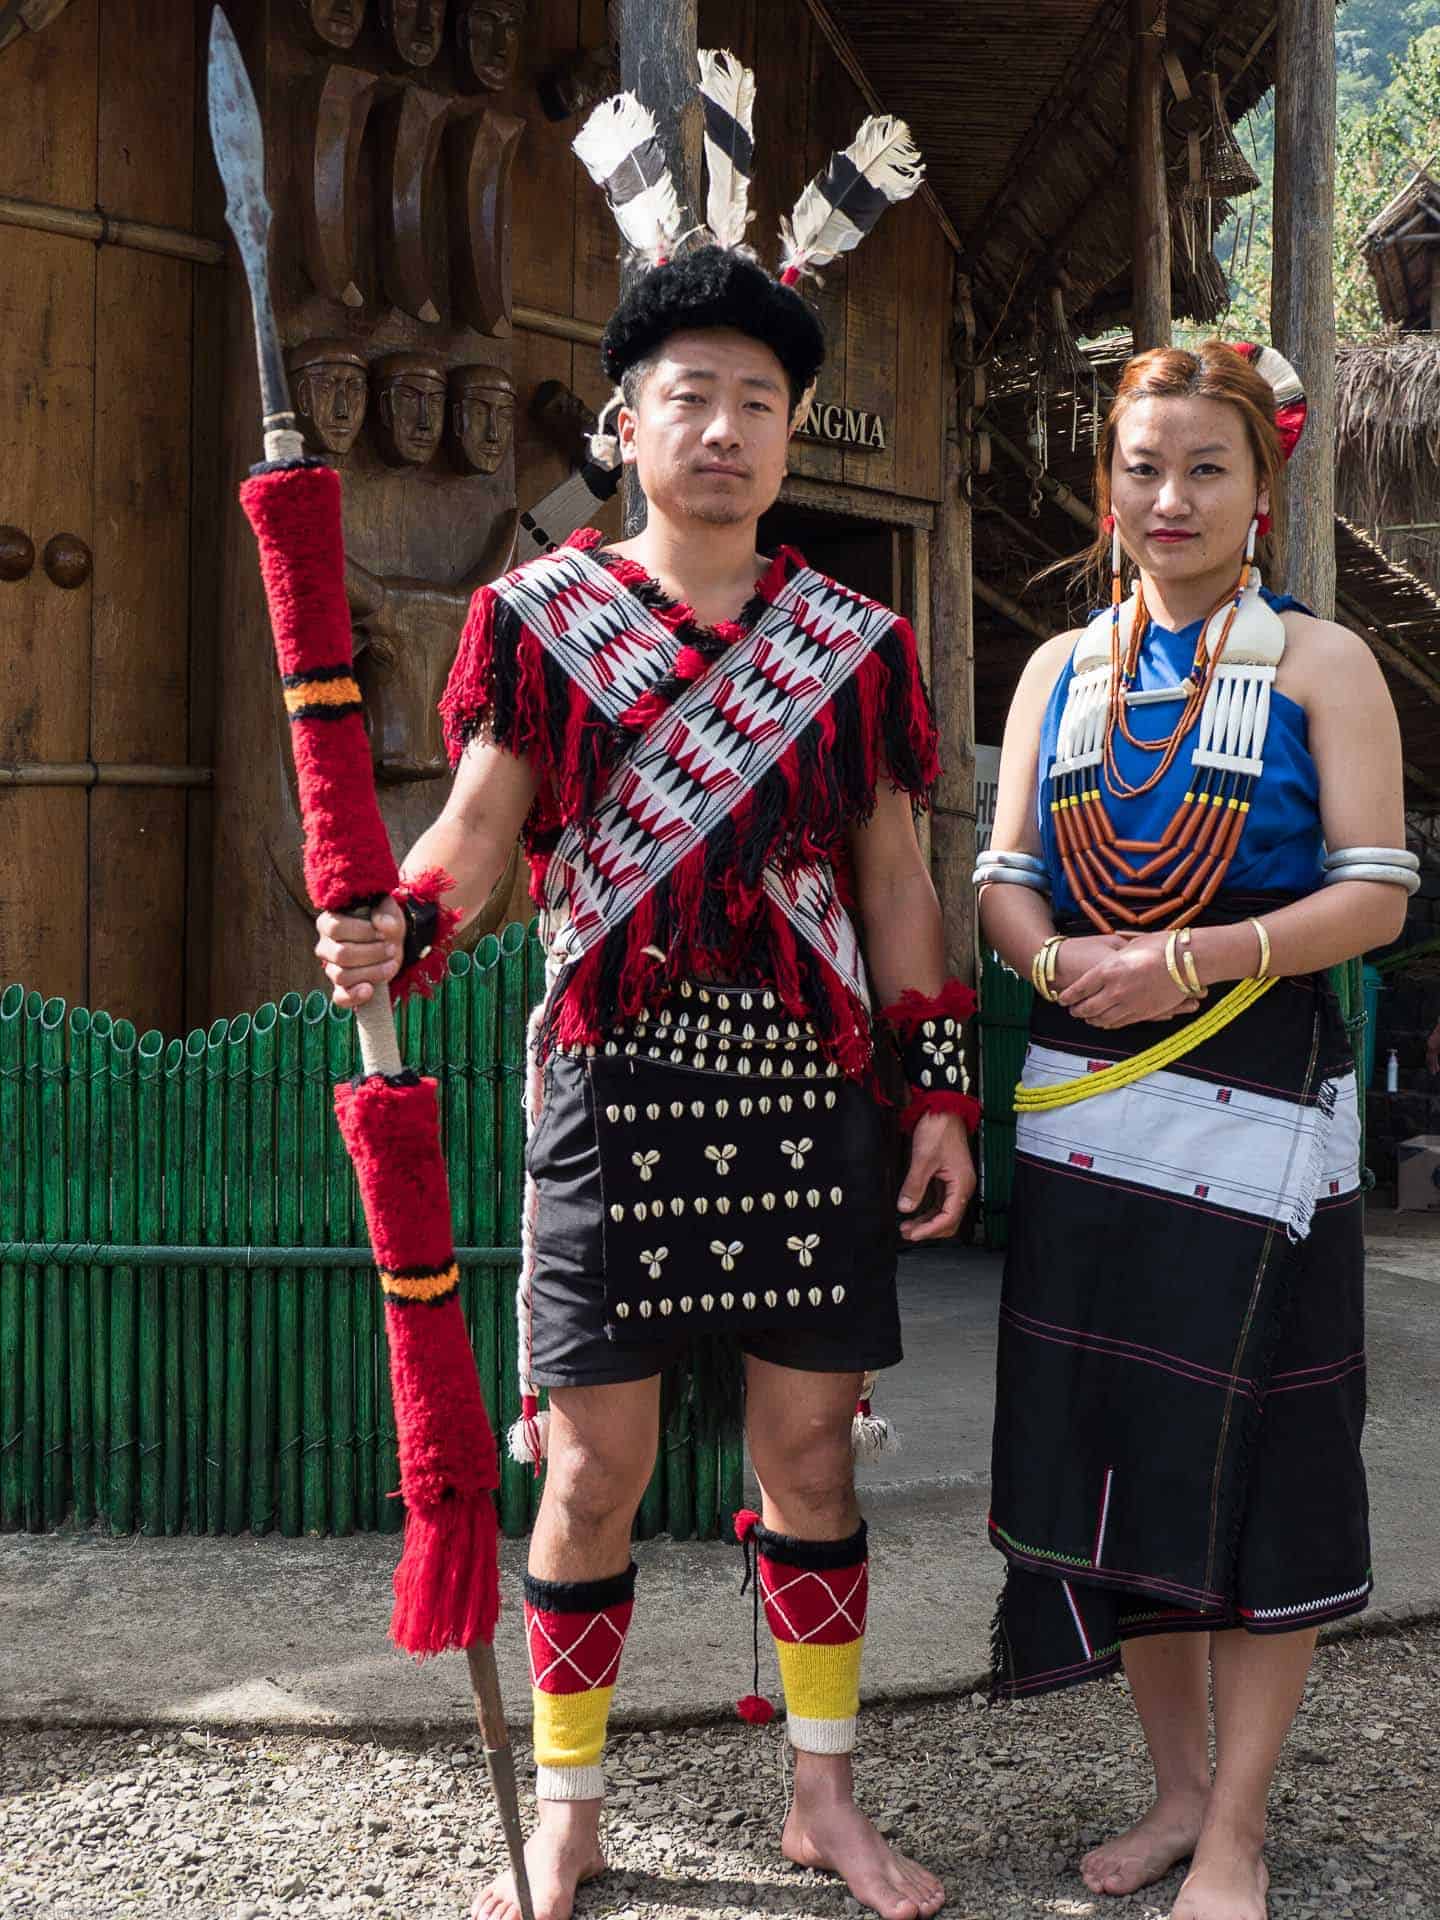 sikkim.ch | Nordostinidien und Sikkim Reisen - Bild zu Nagaland - Travelogue of tea plantations and the Hornbill Festival - Information for your trip to India